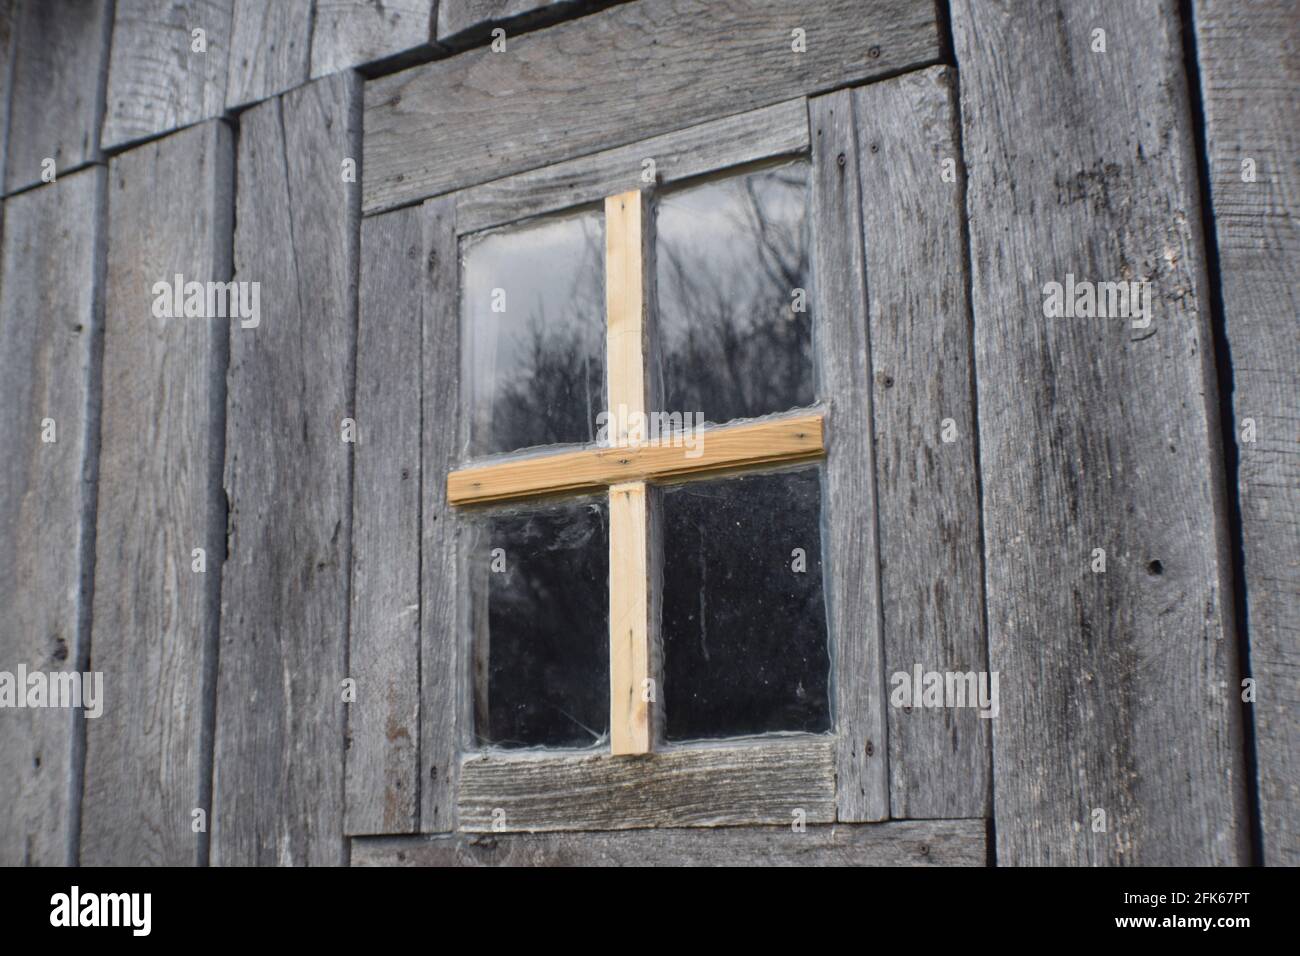 Cross in window Stock Photo